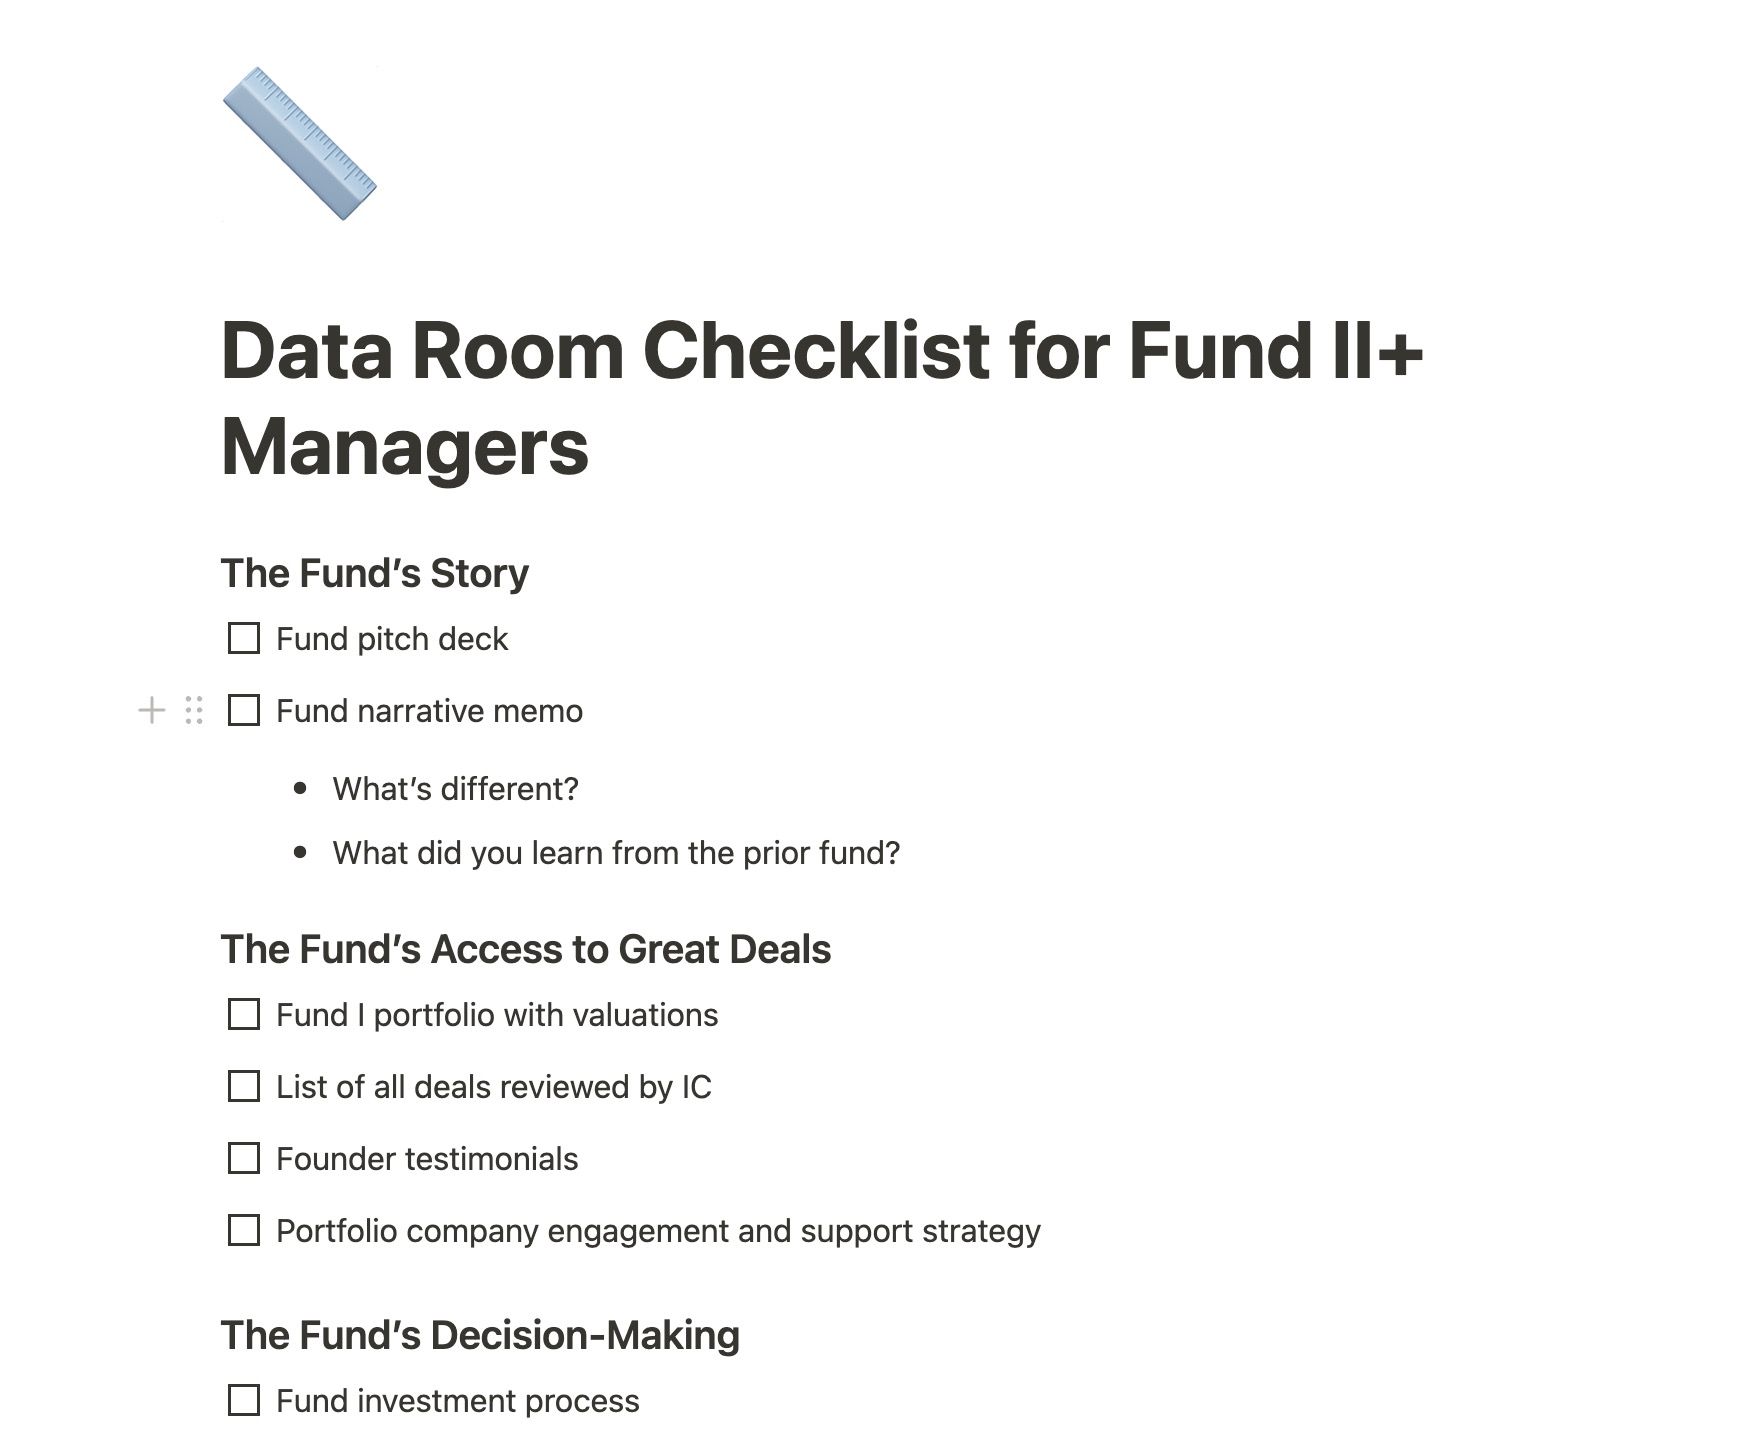 Data Room Checklist screenshot